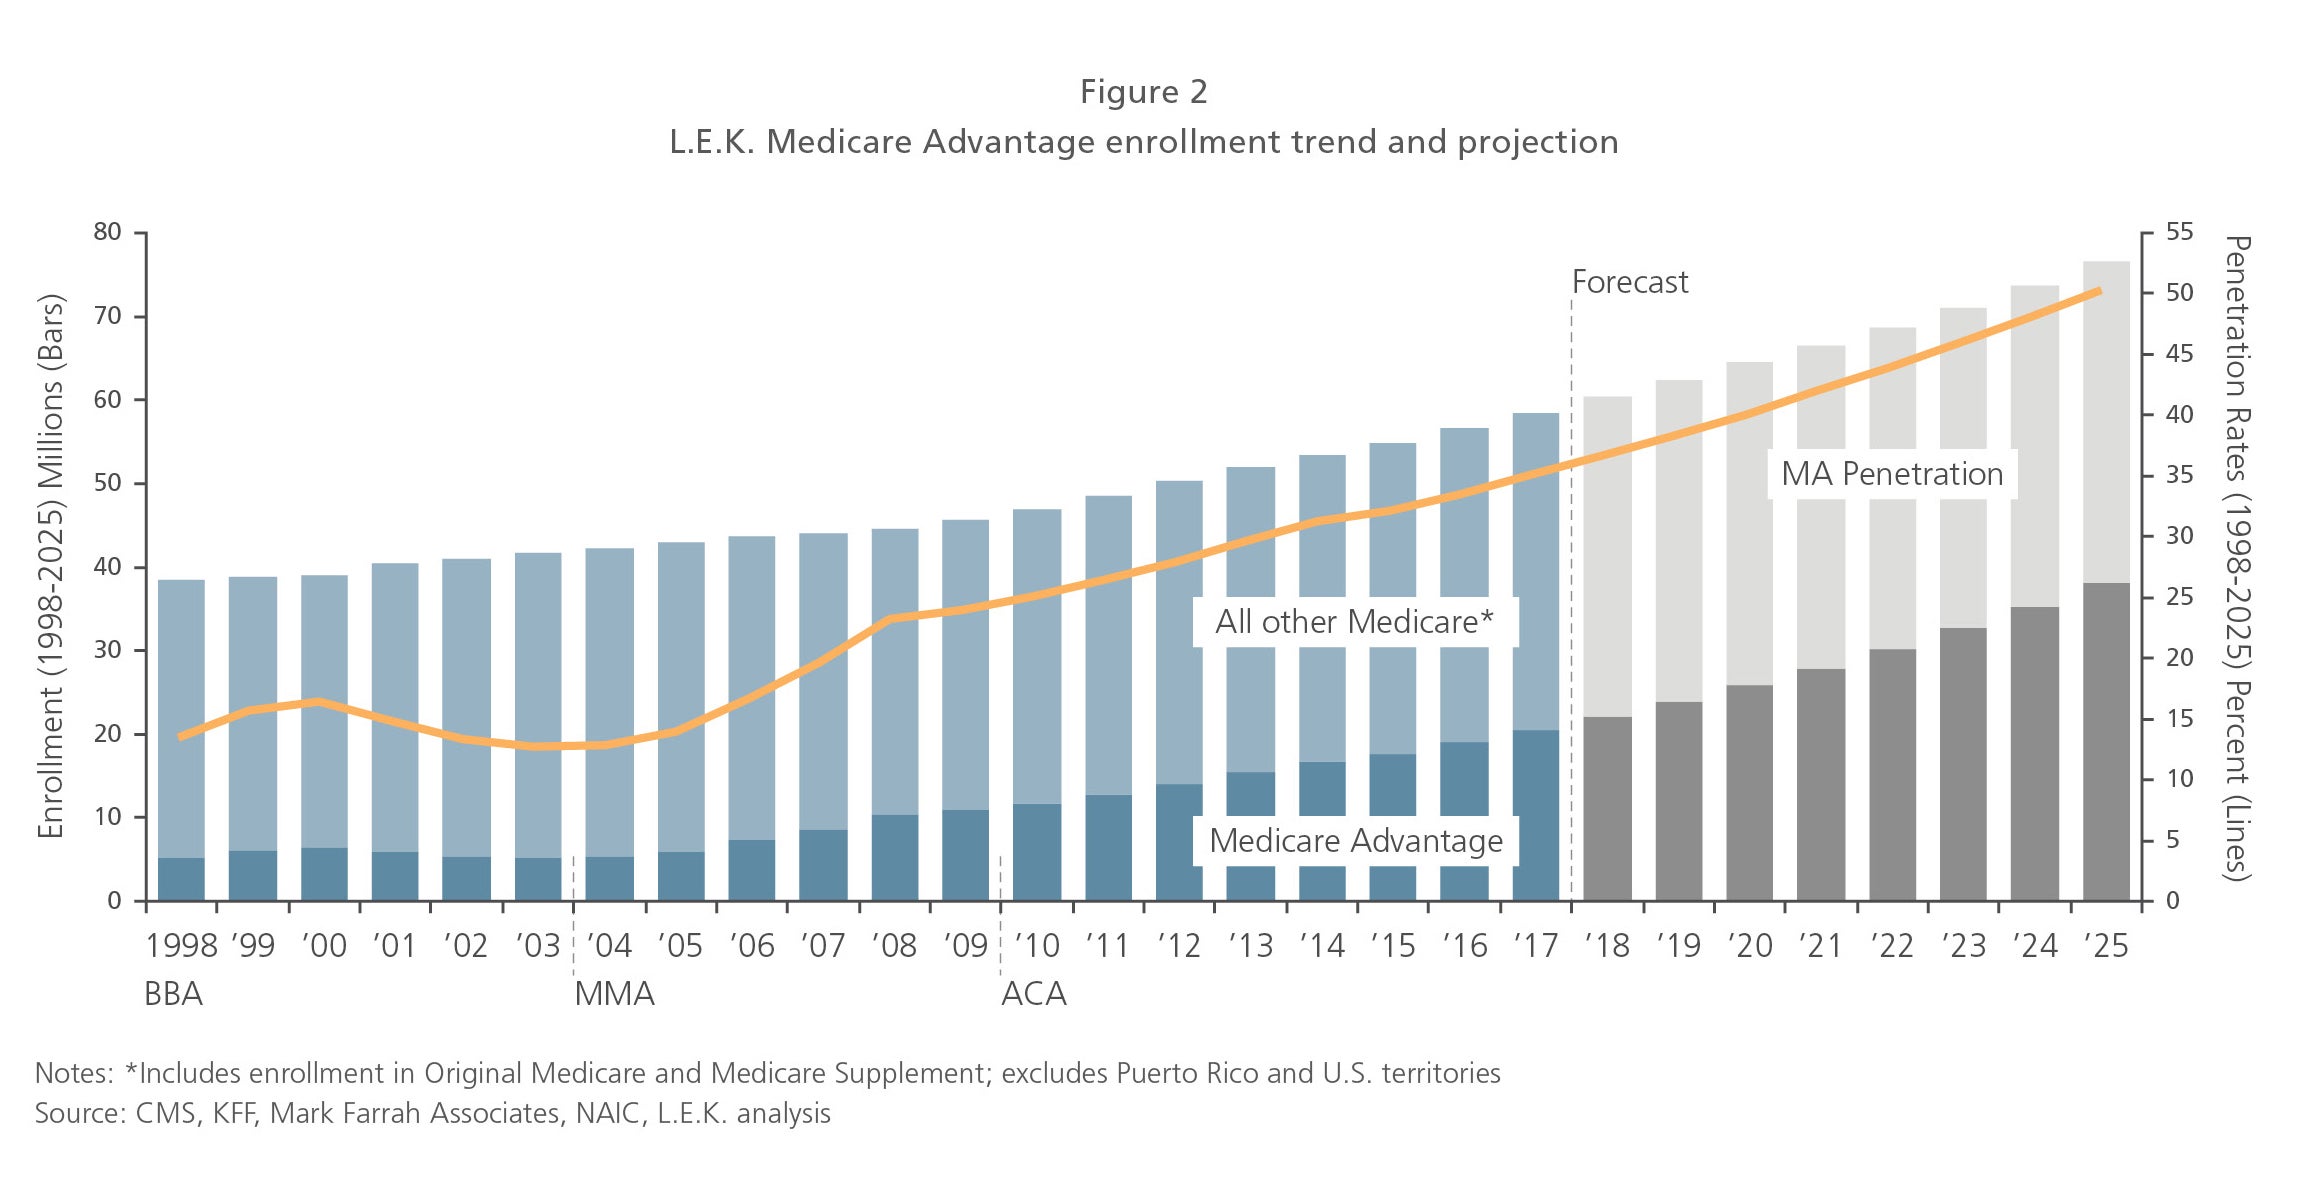 L.E.K. Medicare Advantage enrollment trend and projection